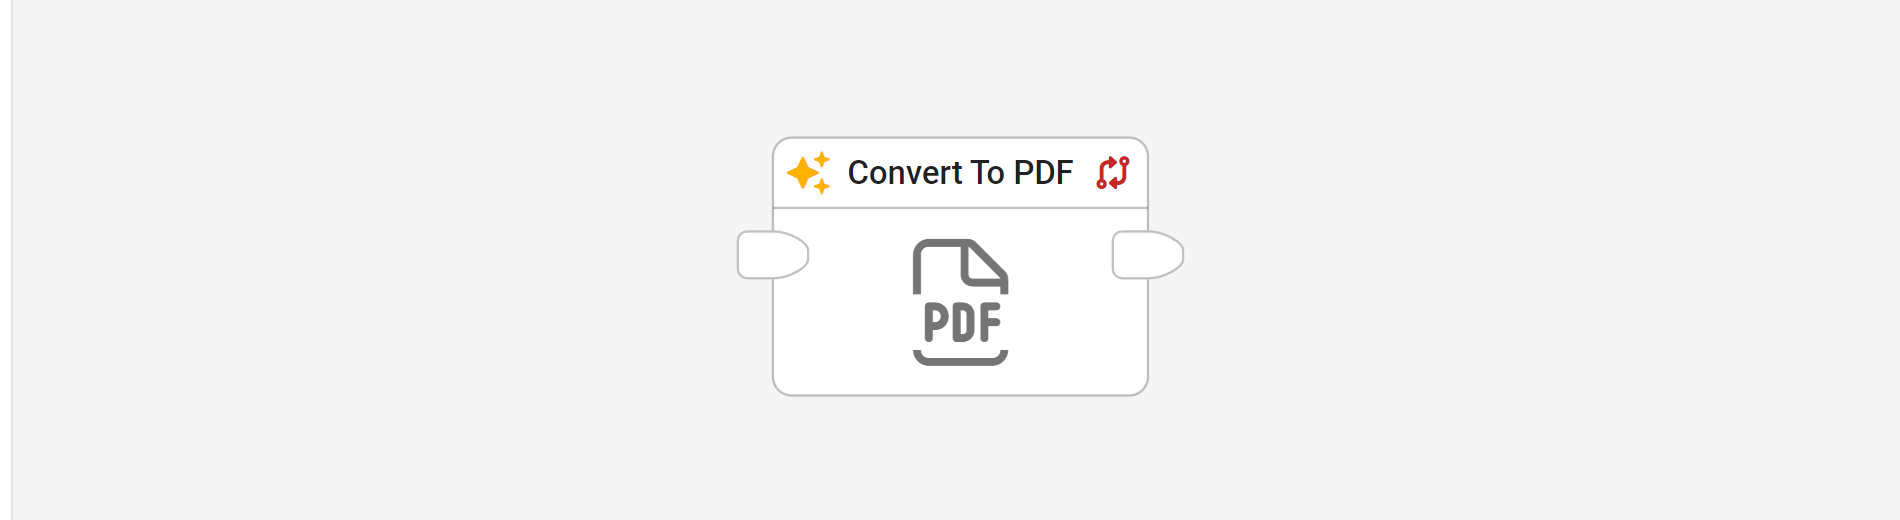 Convert to PDF block in flow editor